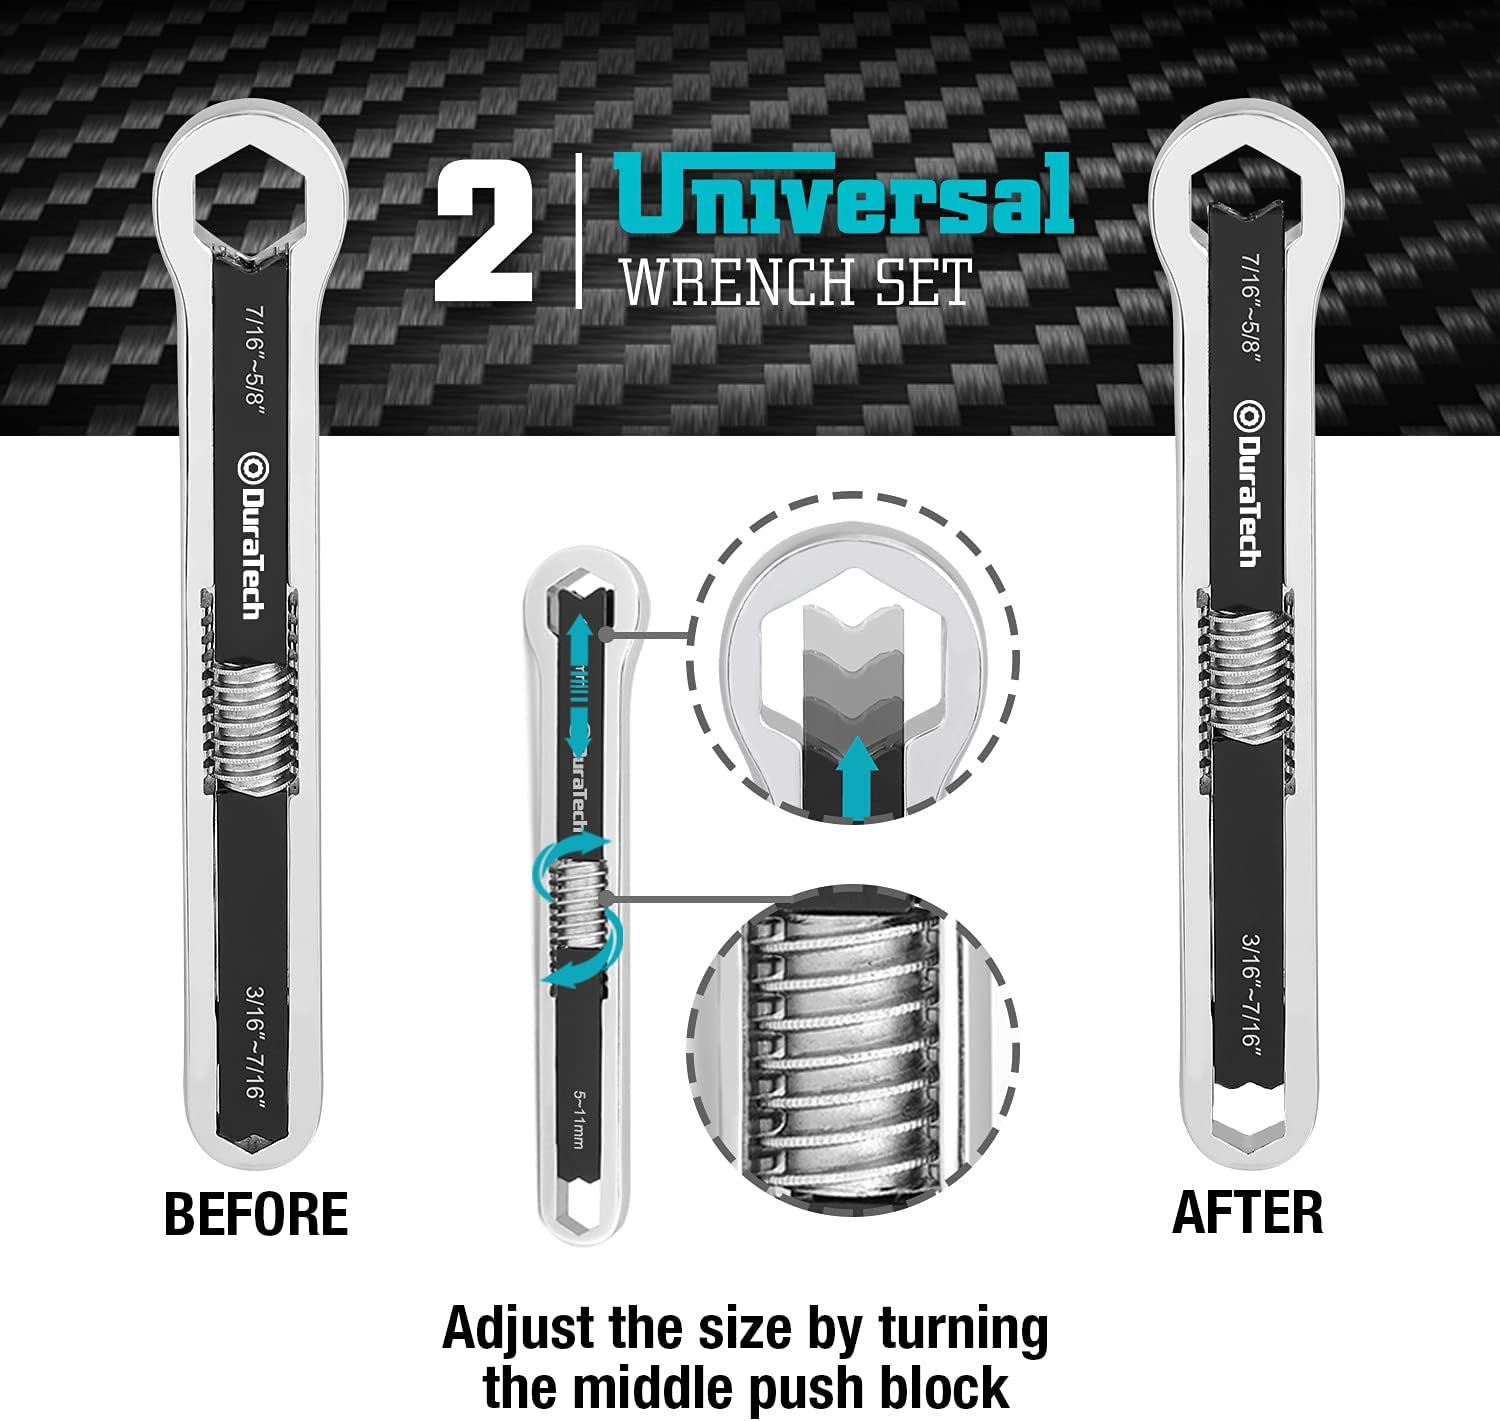 IRONDUKE TOOLS DURATECH Universal Wrench Set, Adjustable Wrench Set, SAE